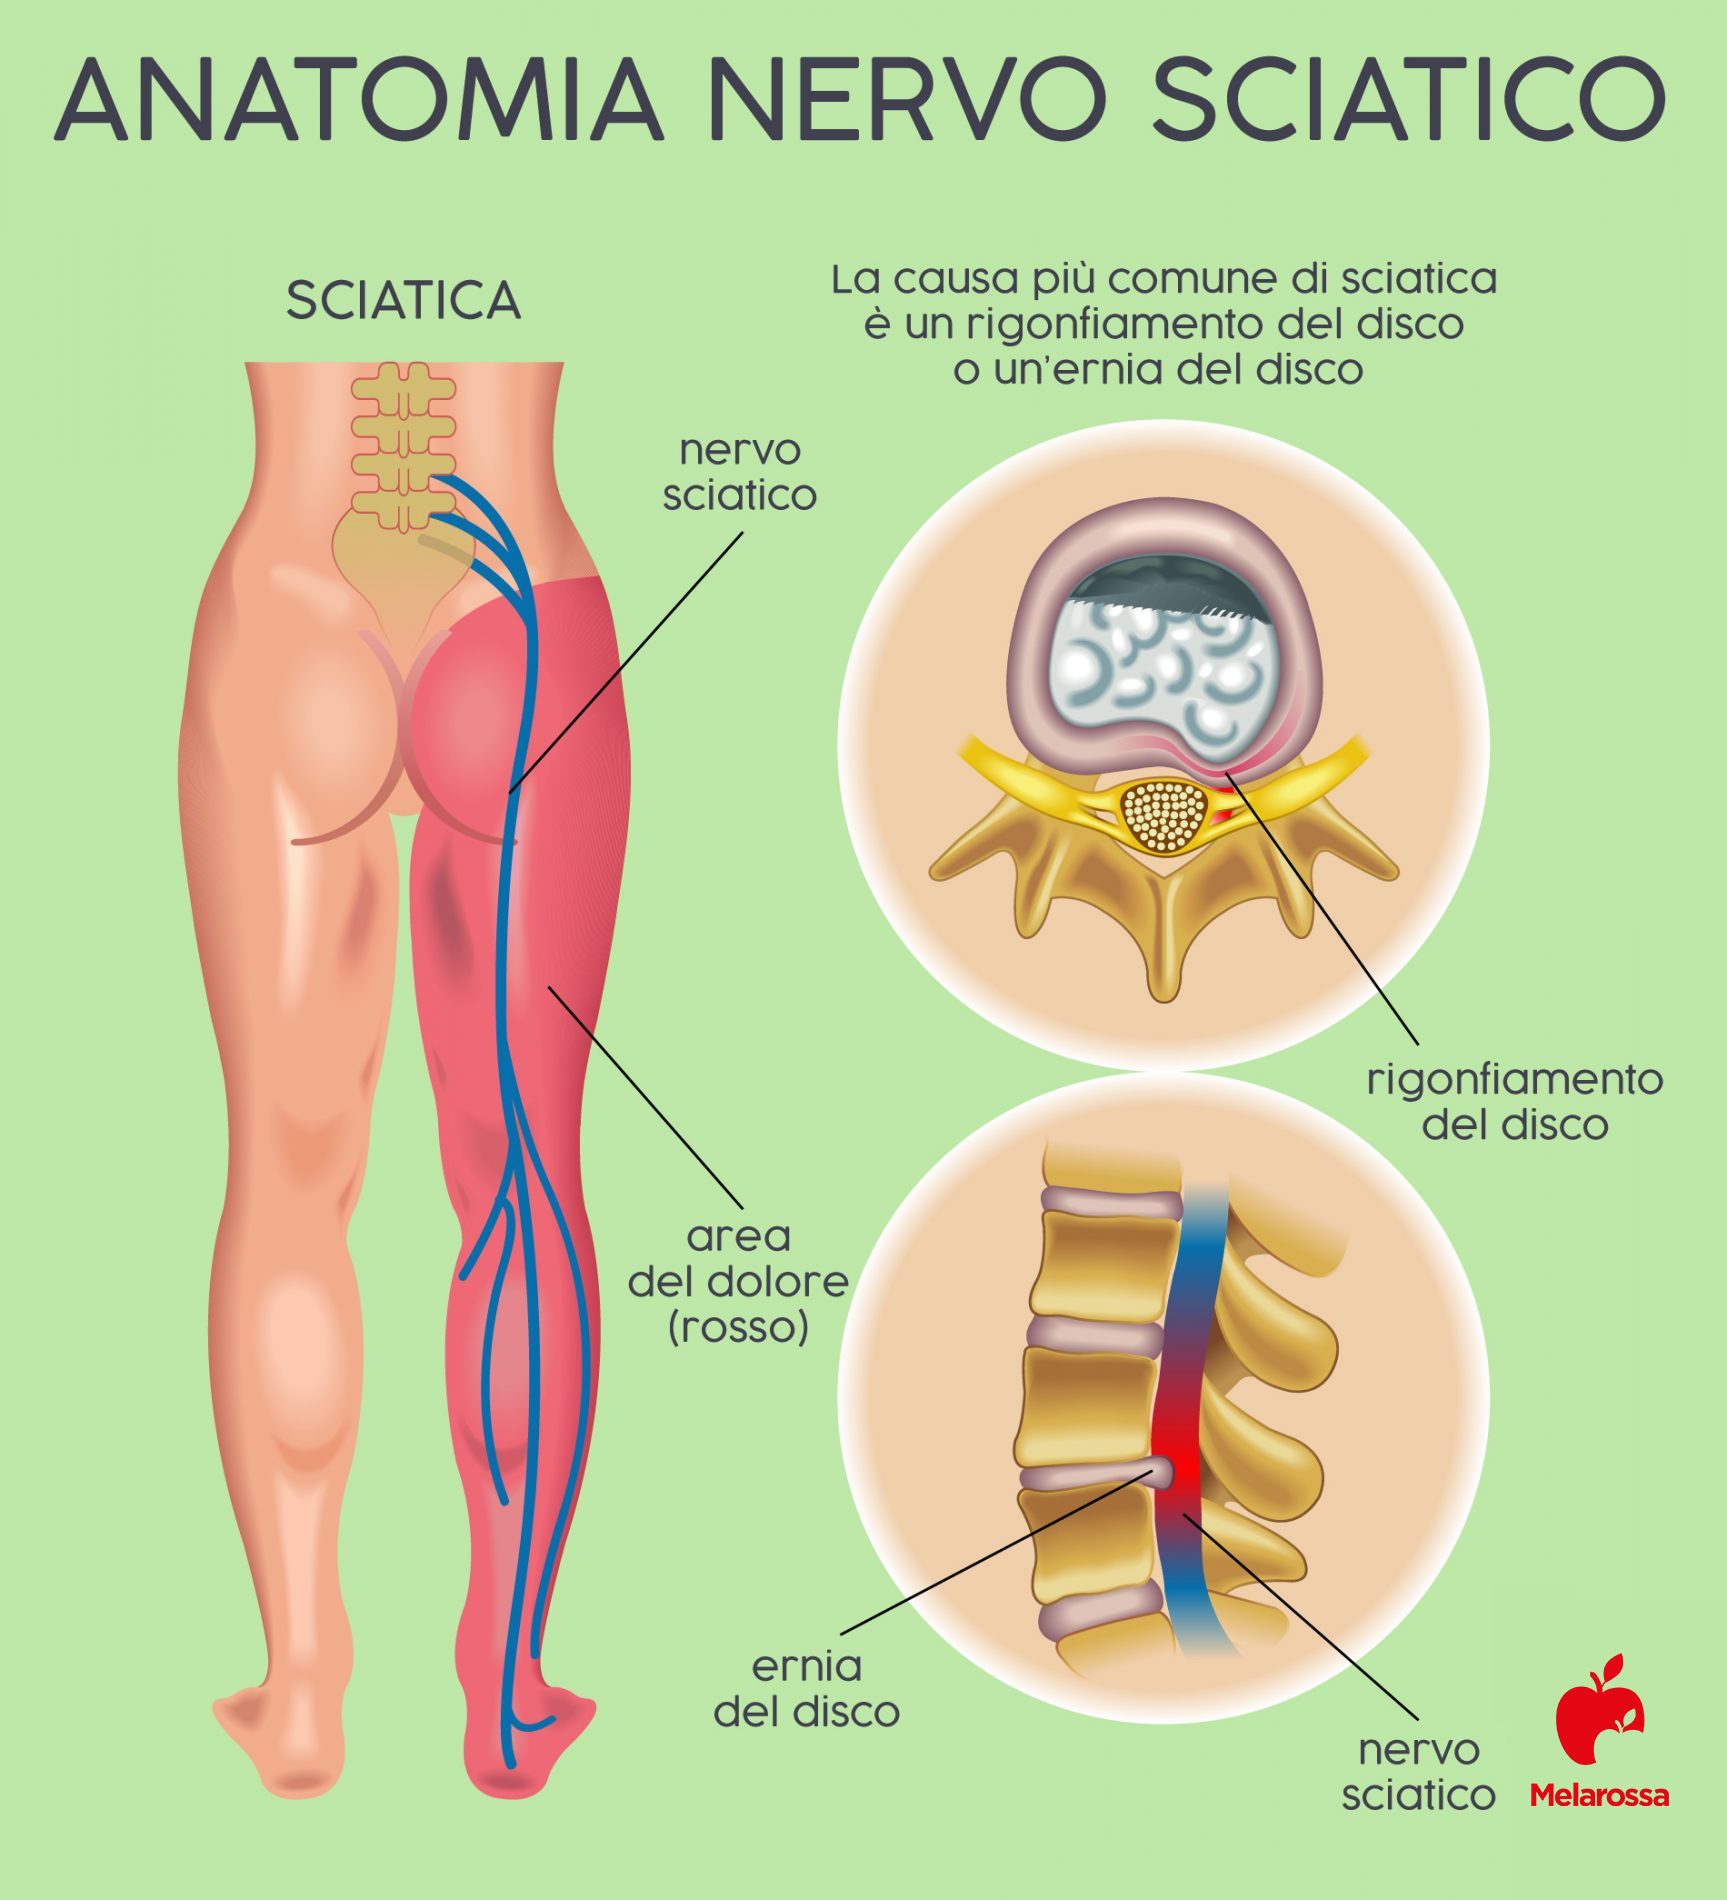 nervo sciatico: anatomia